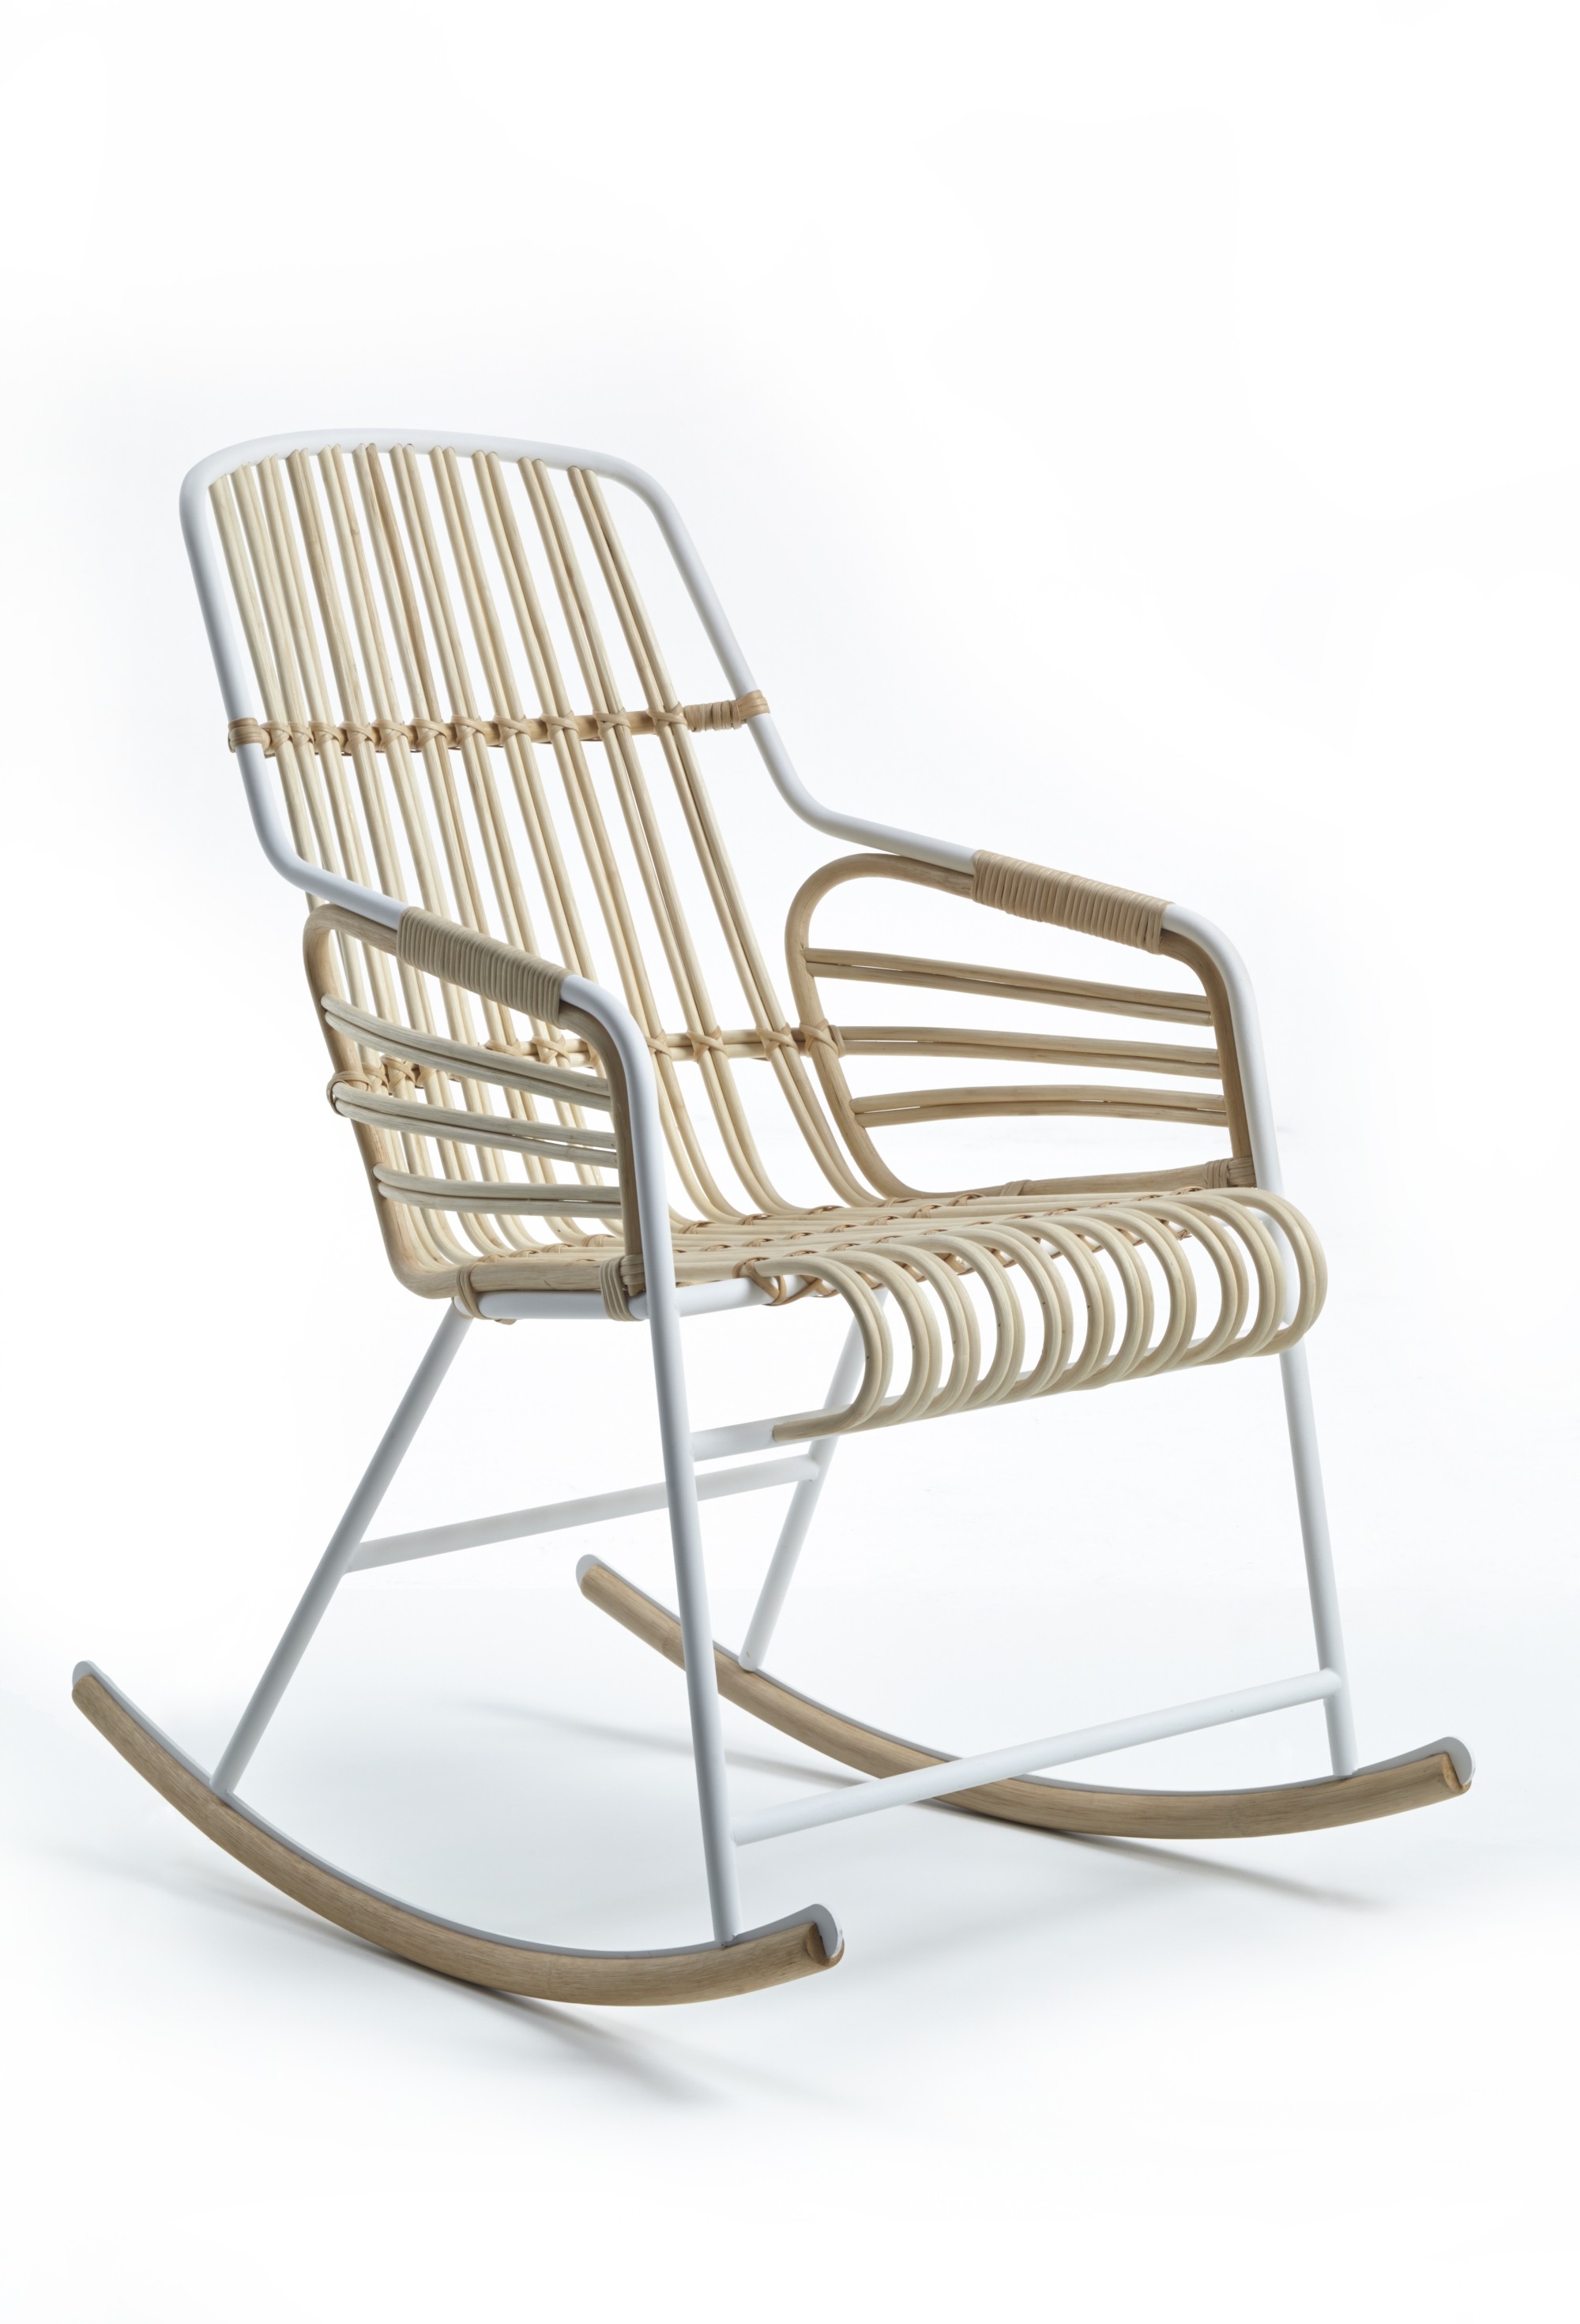 energie Taille kalmeren Raphia Rocking Chair van Casamania - PUUR Design & Interieur